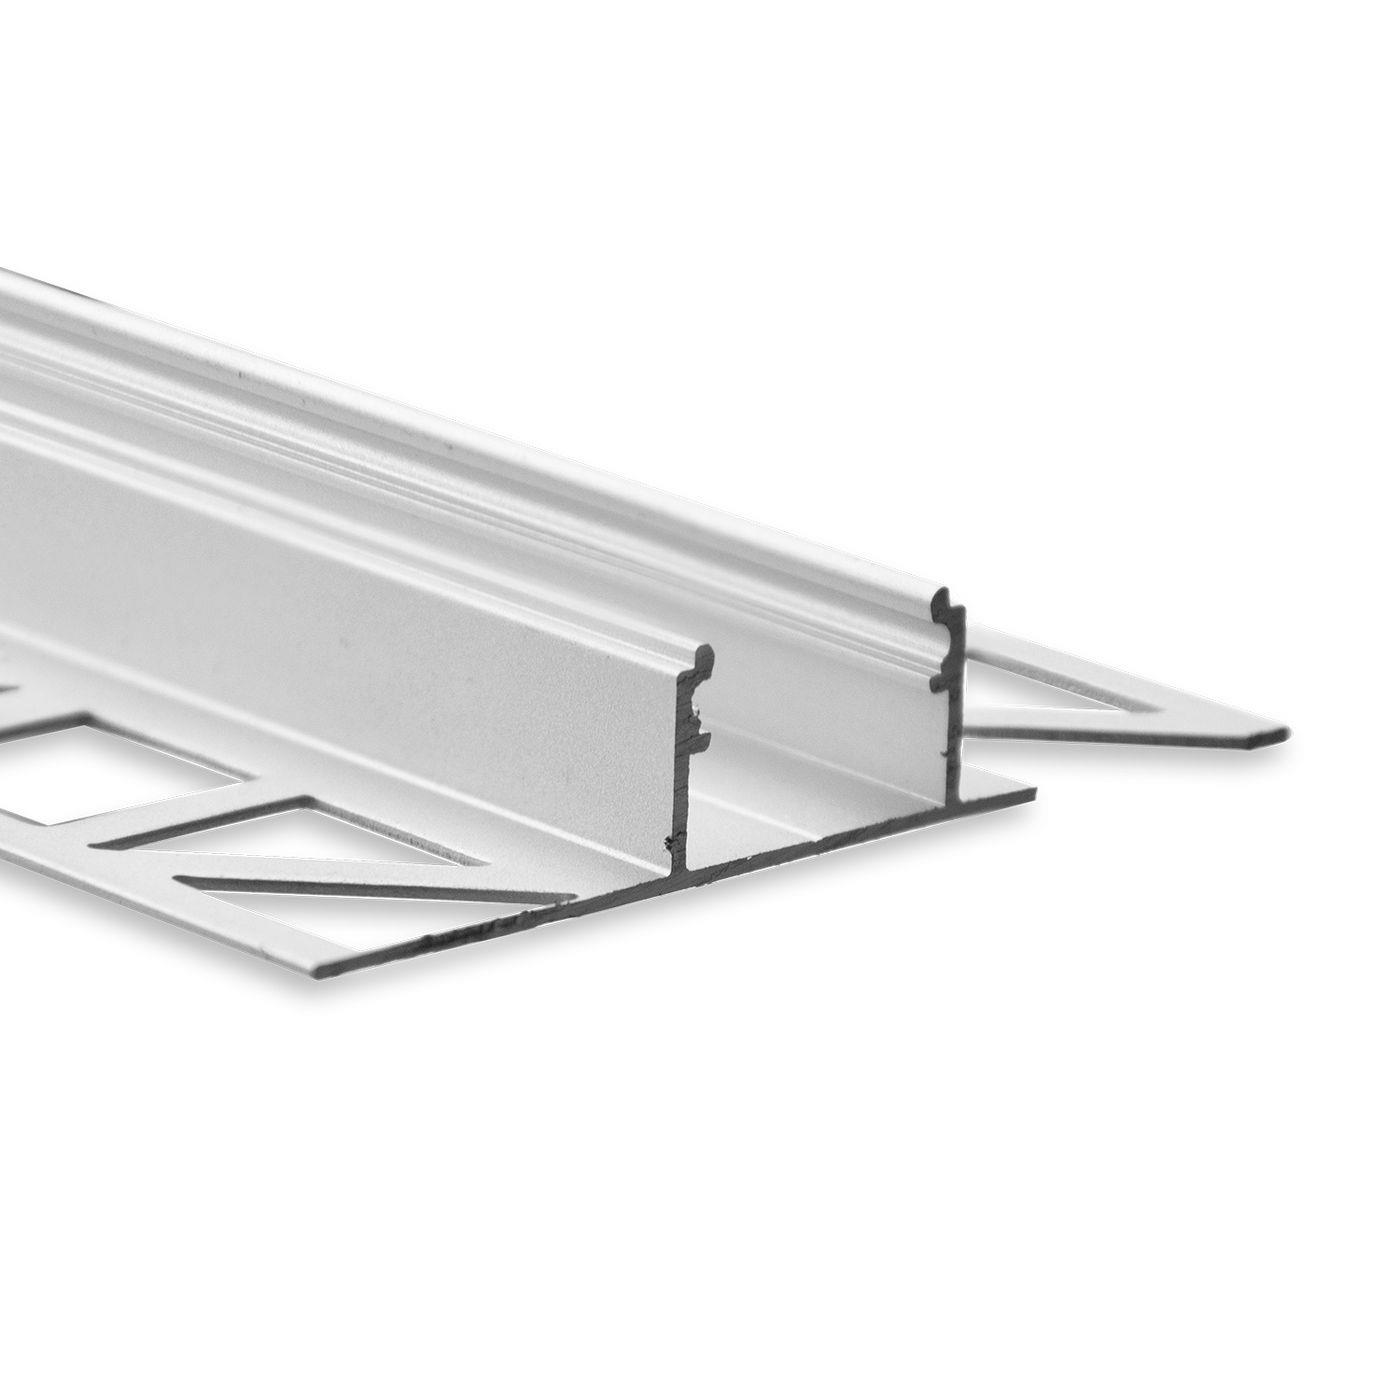 2m LED profile FP1 Silver 57x11mm Aluminium Tile profile for 14mm LED strips